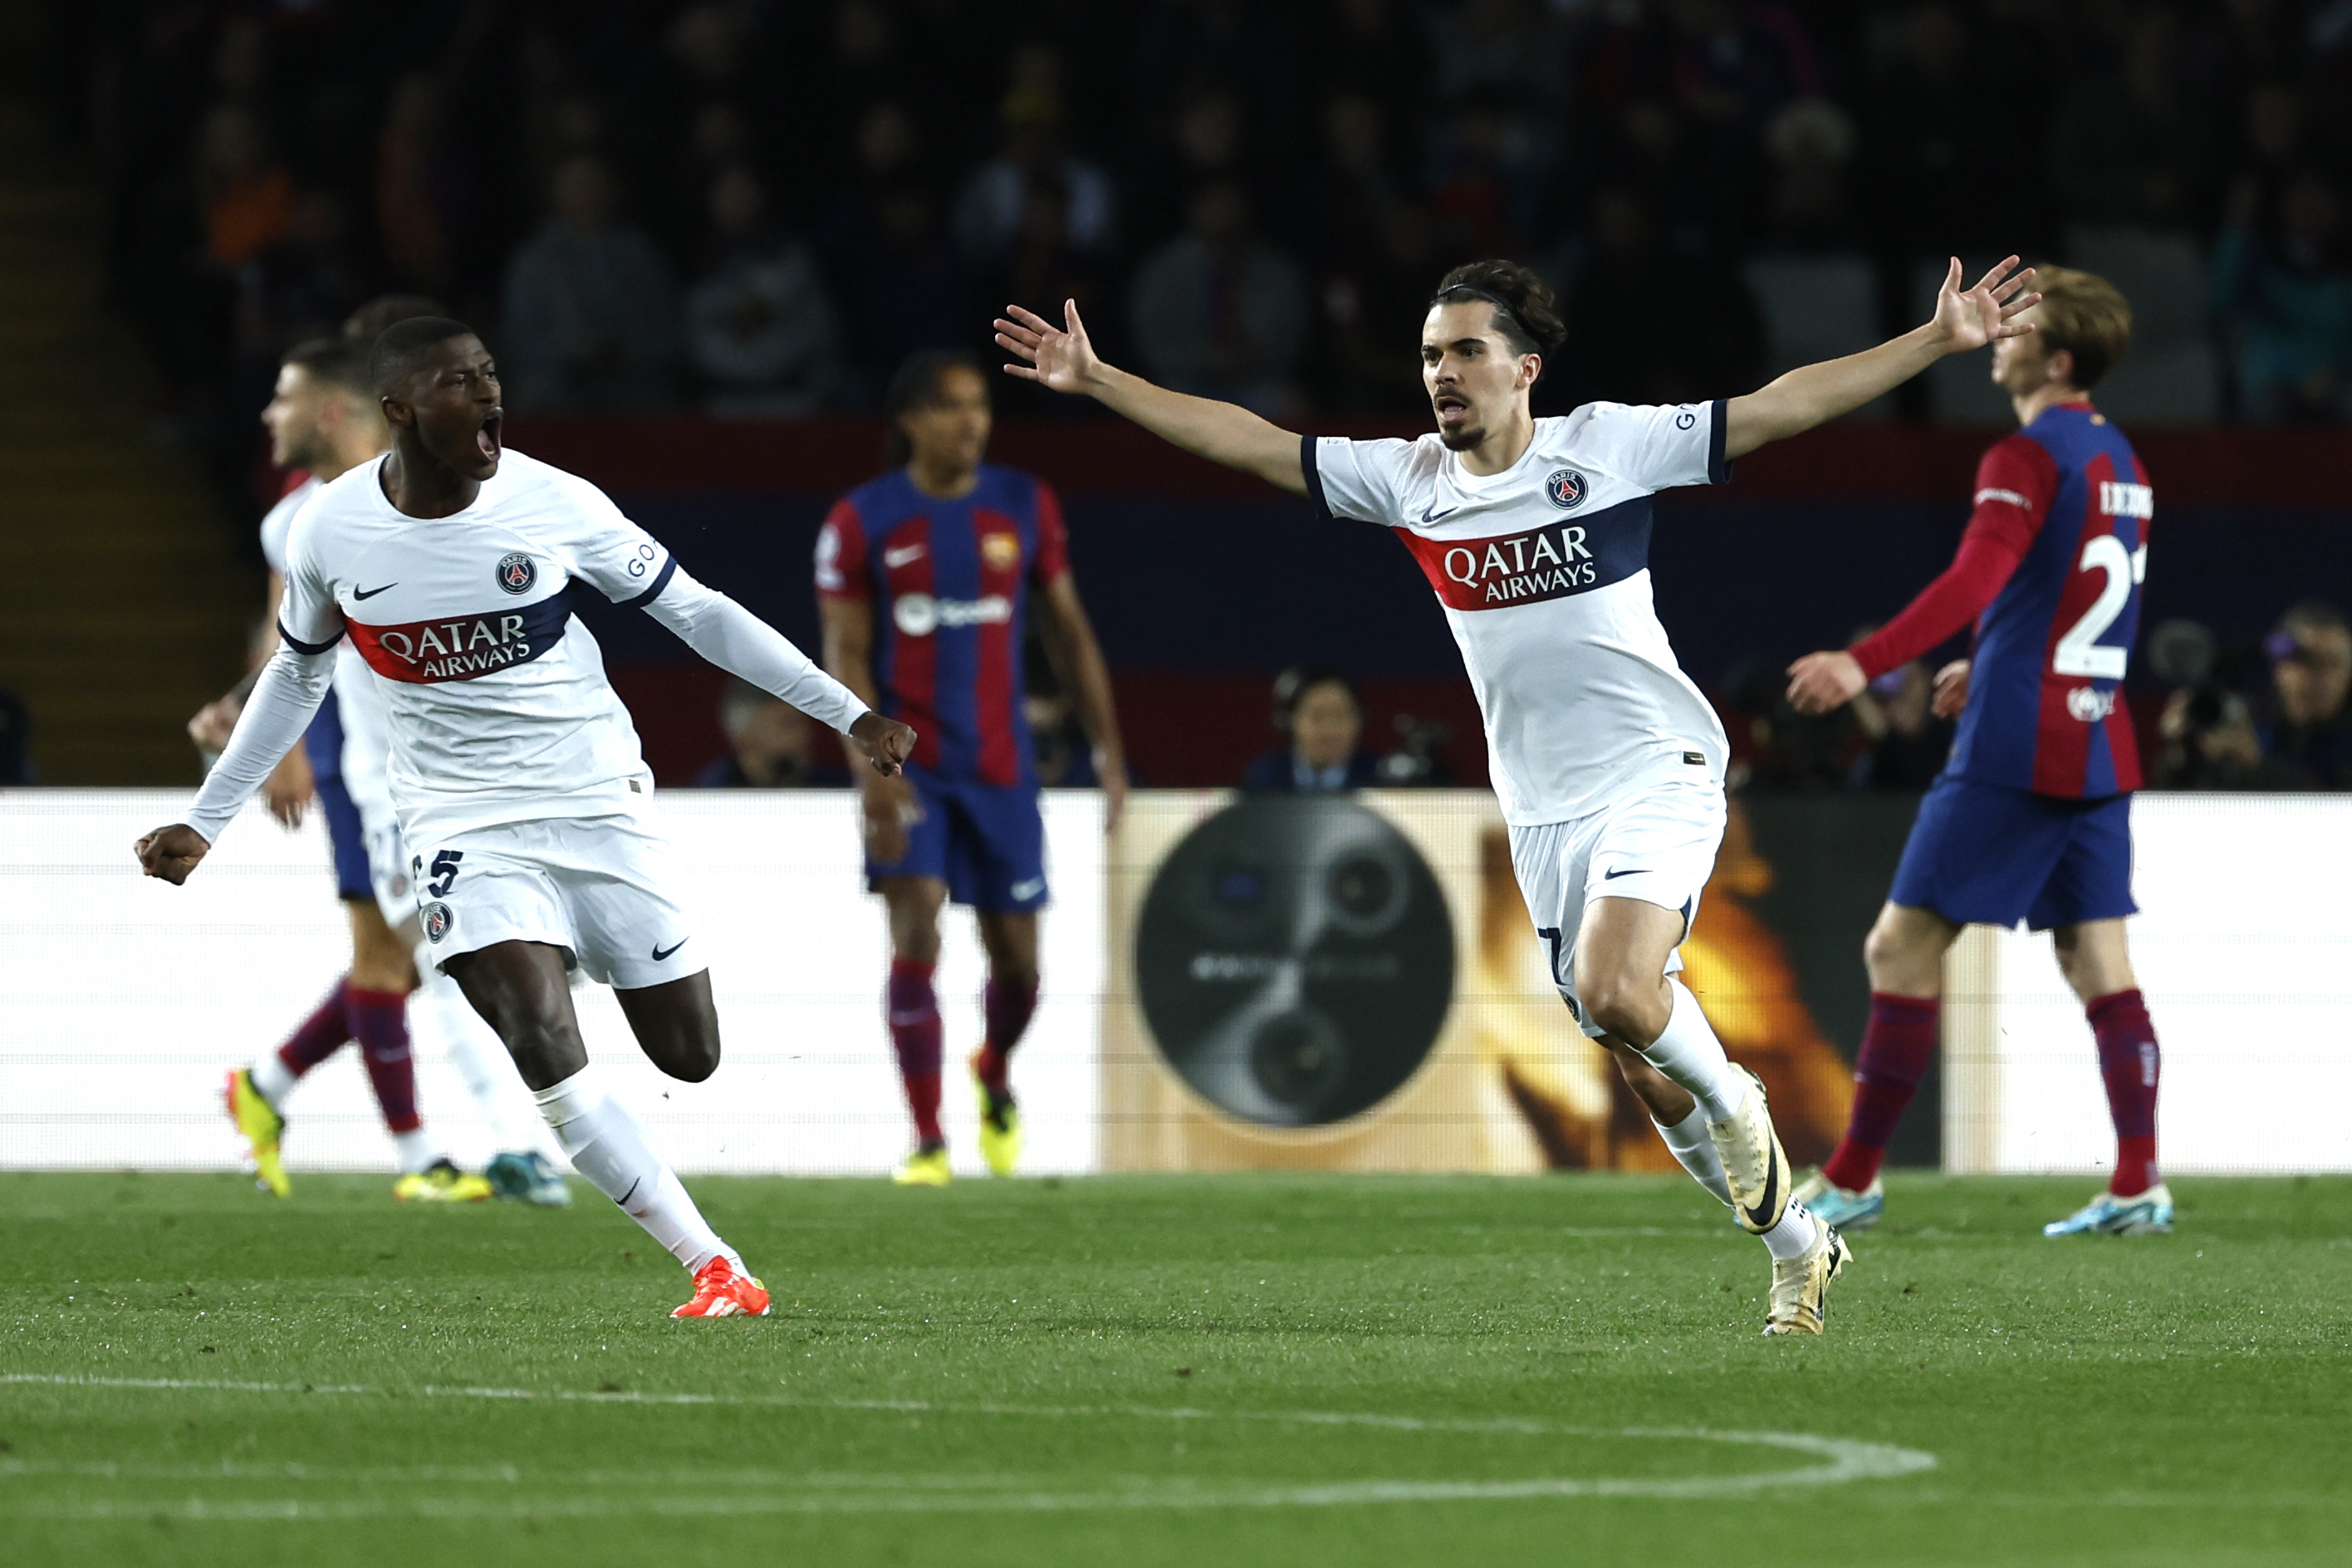 Paris St Germain knocked Barcelona out of the Champions League quarter-finals